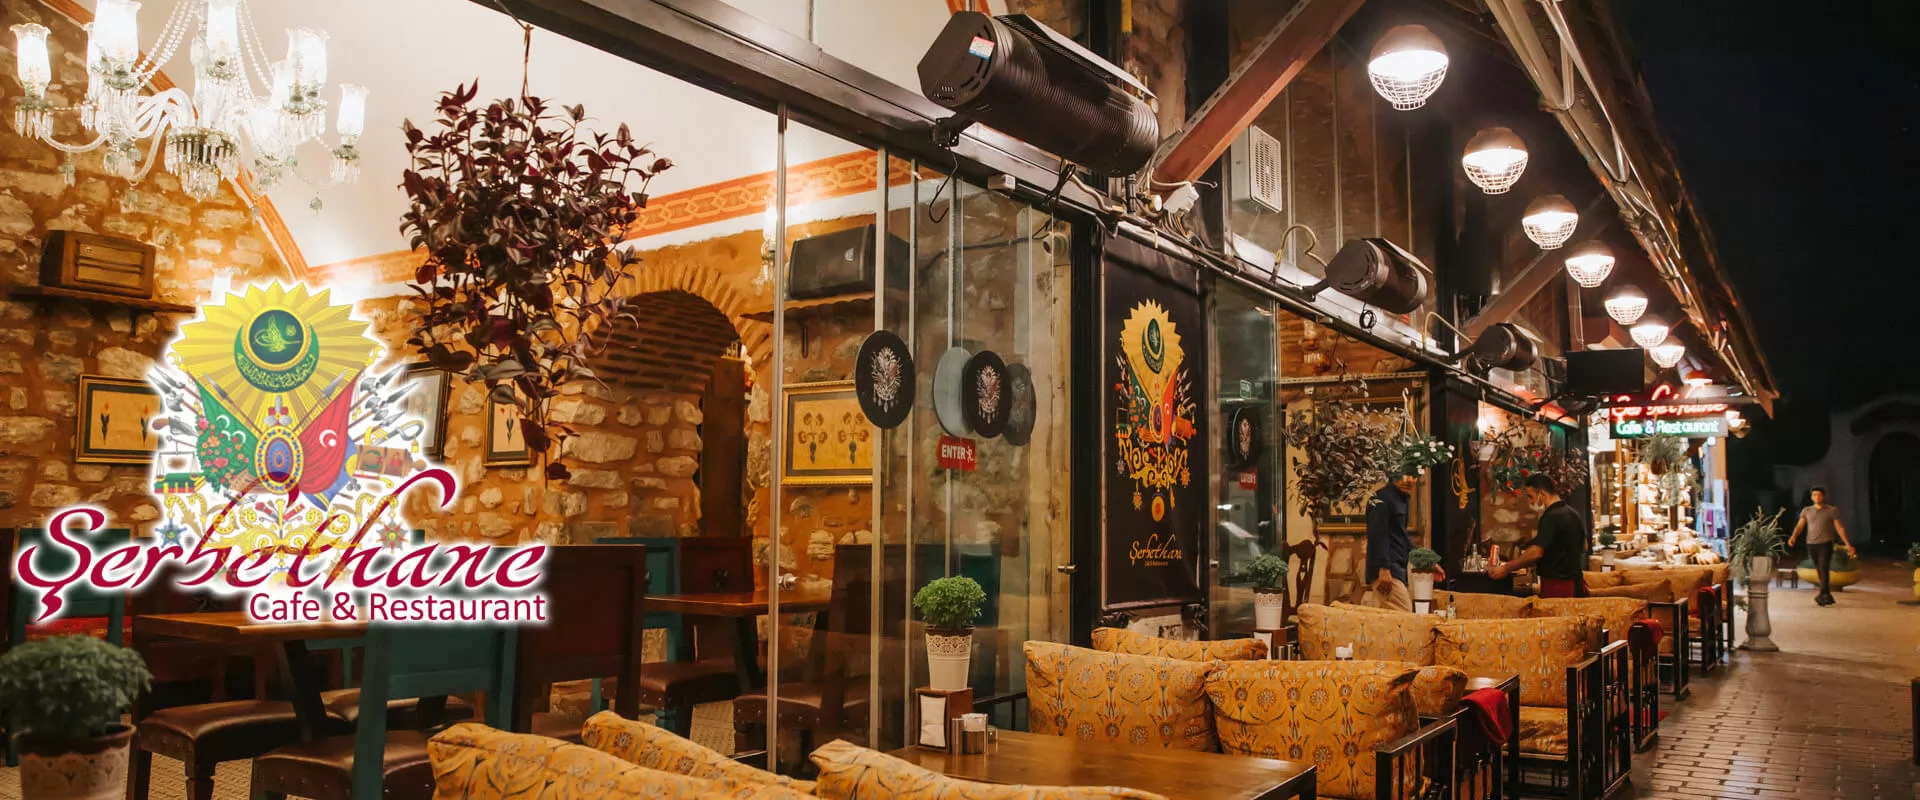 Şerbethane Cafe & Restaurant #4